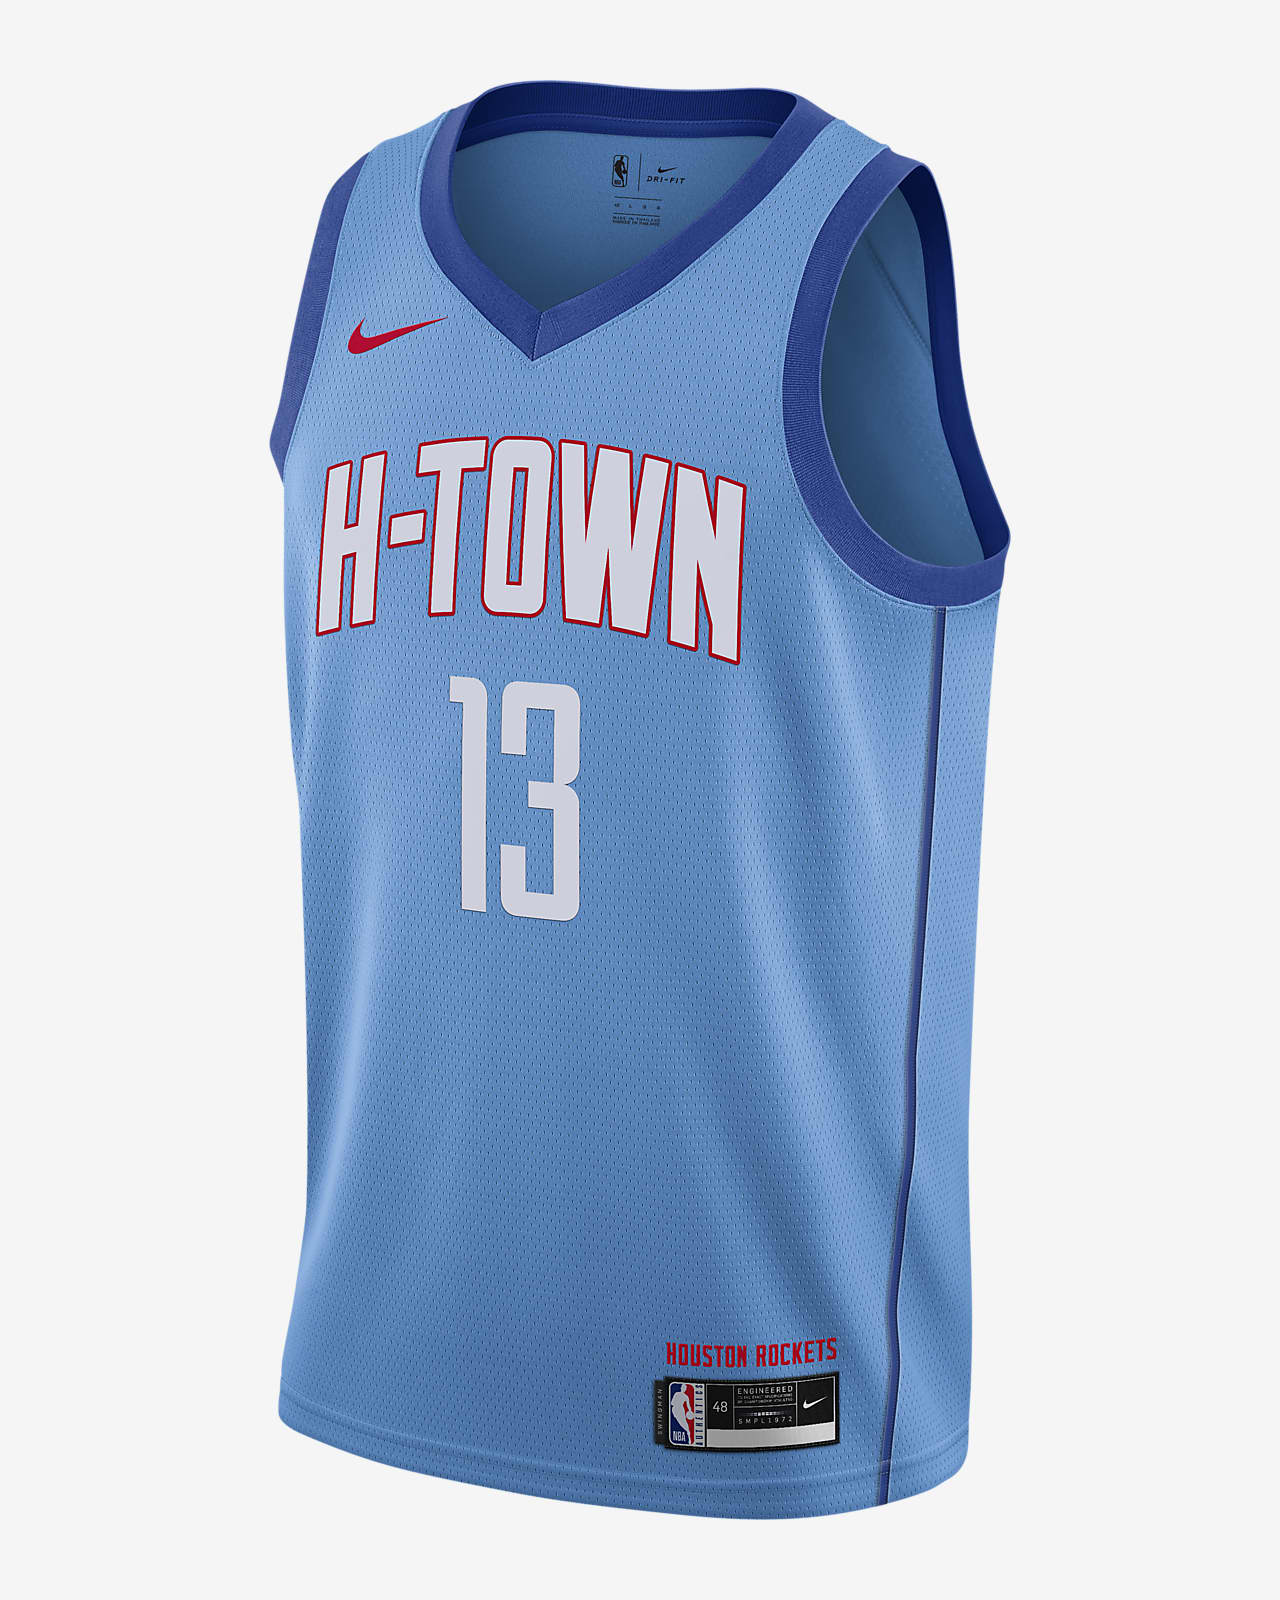 Houston Rockets City Edition Nike NBA Swingman Jersey